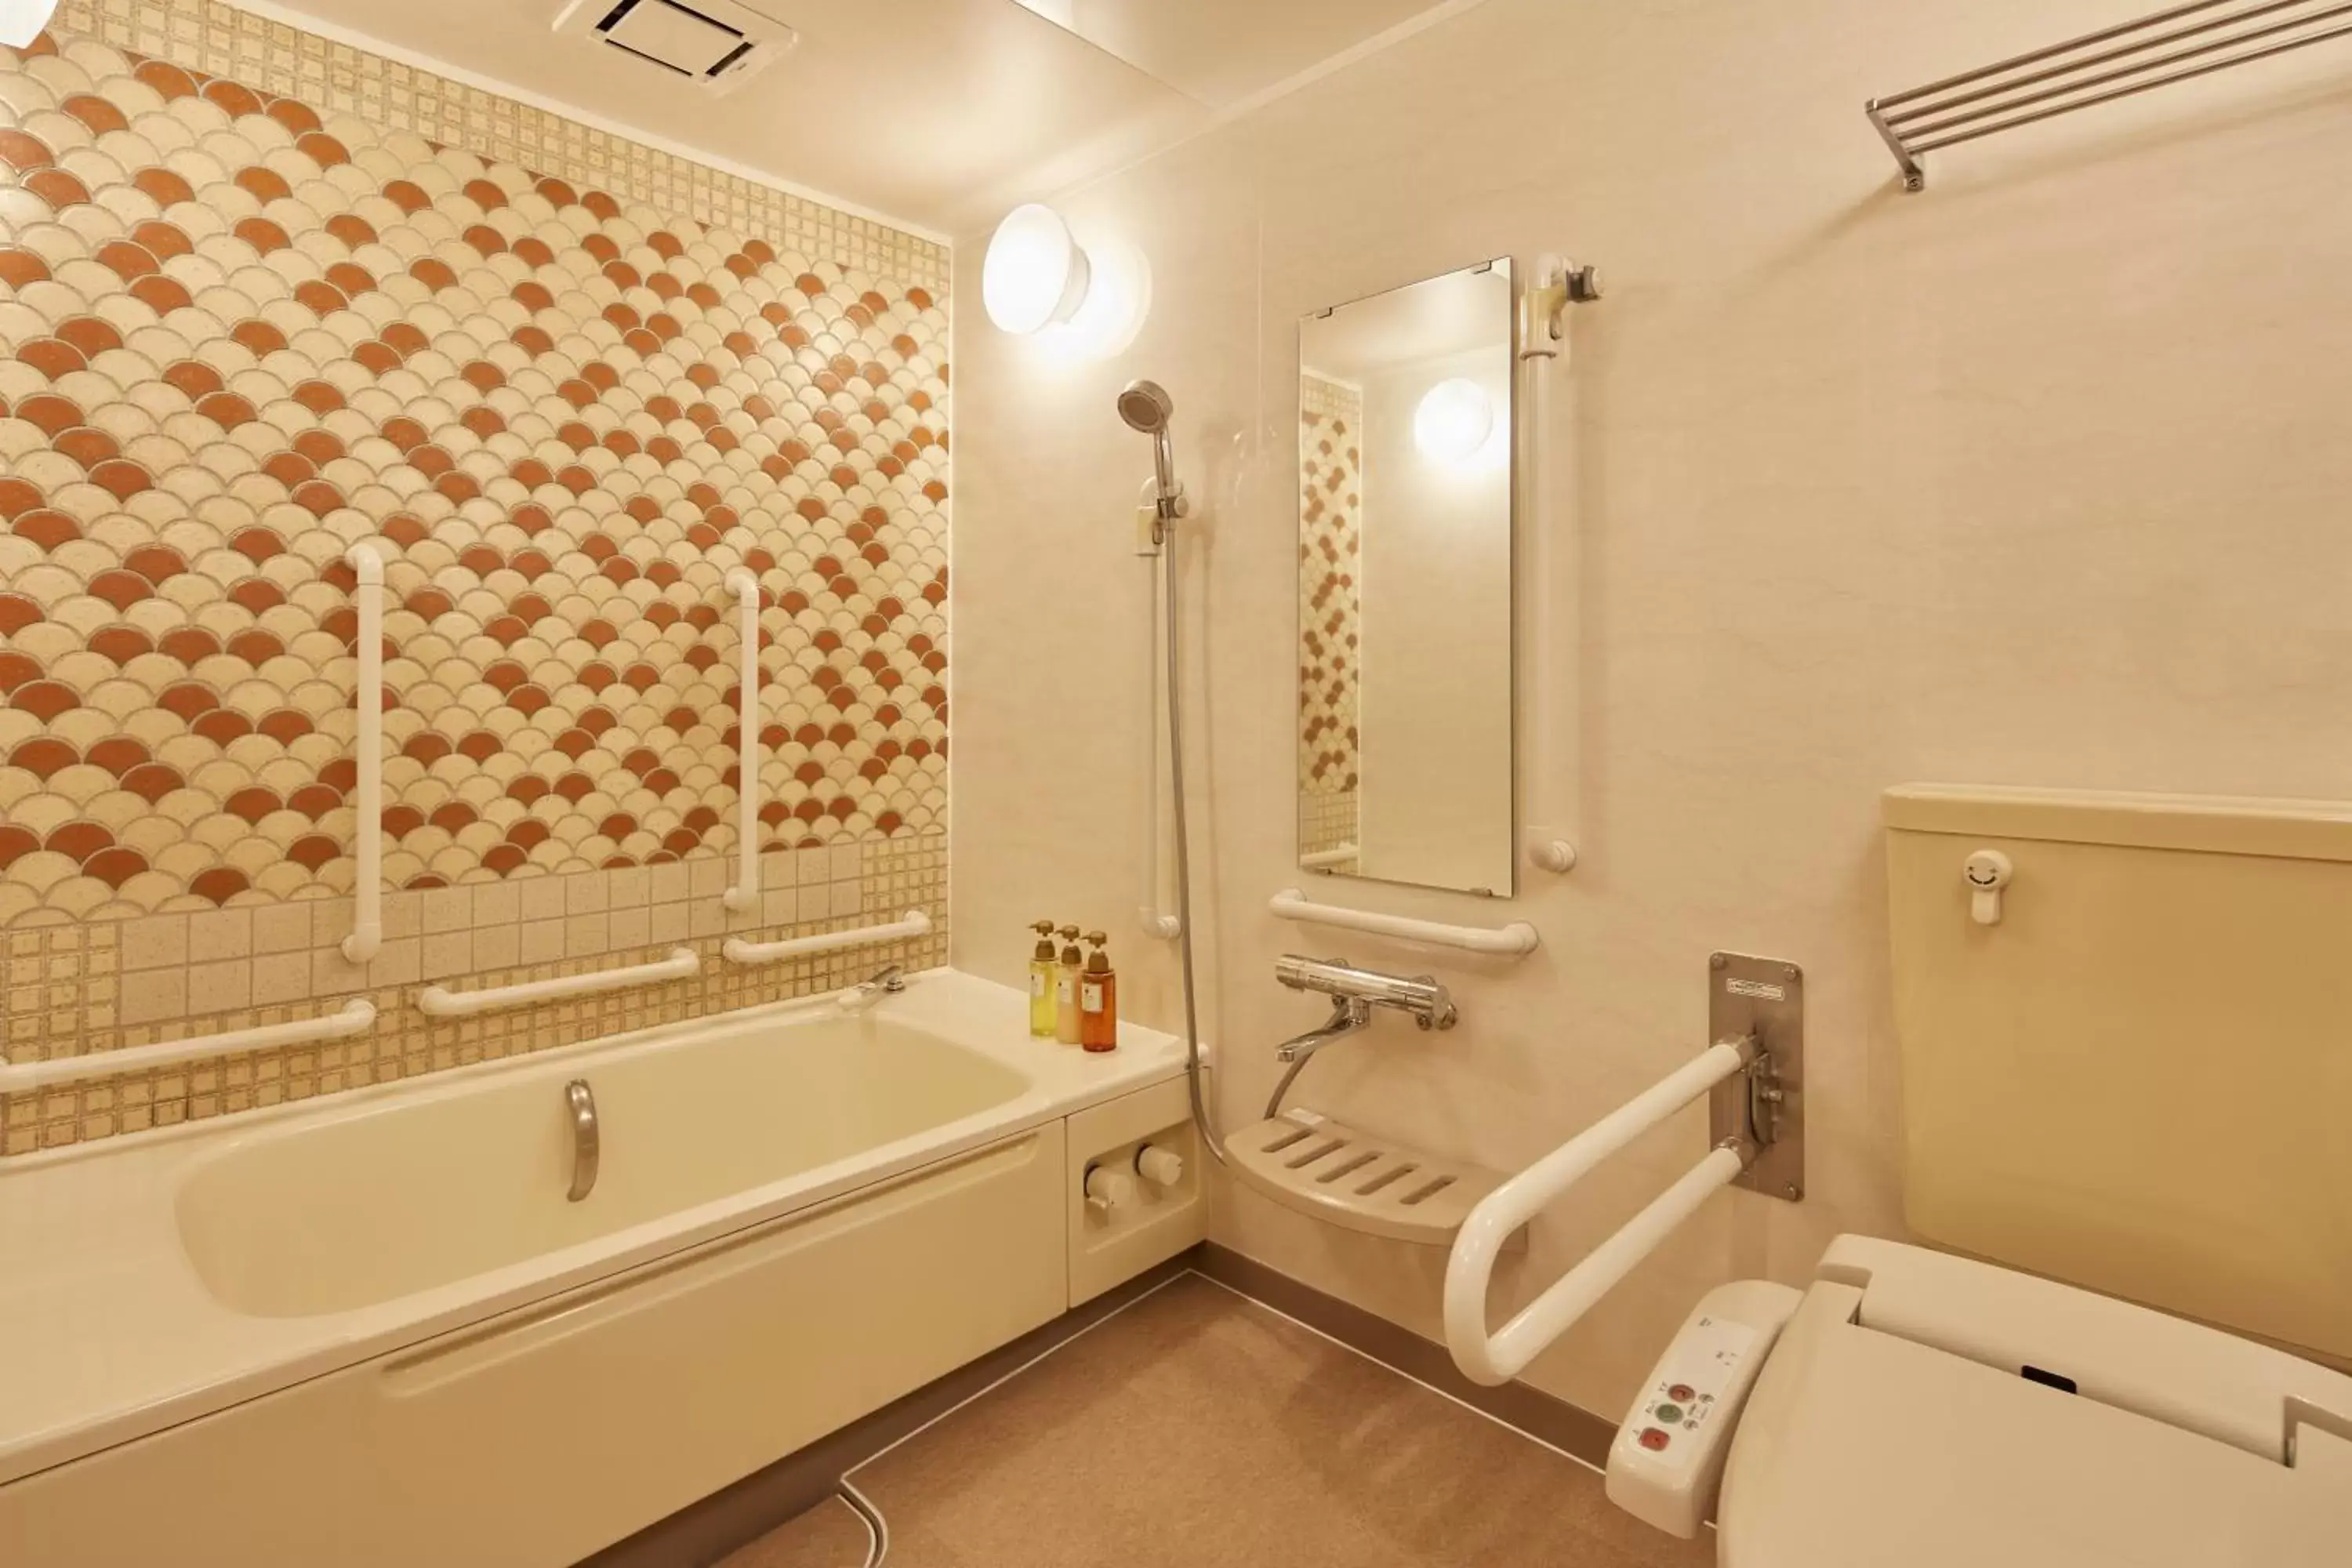 Photo of the whole room, Bathroom in HOTEL MYSTAYS Asakusabashi